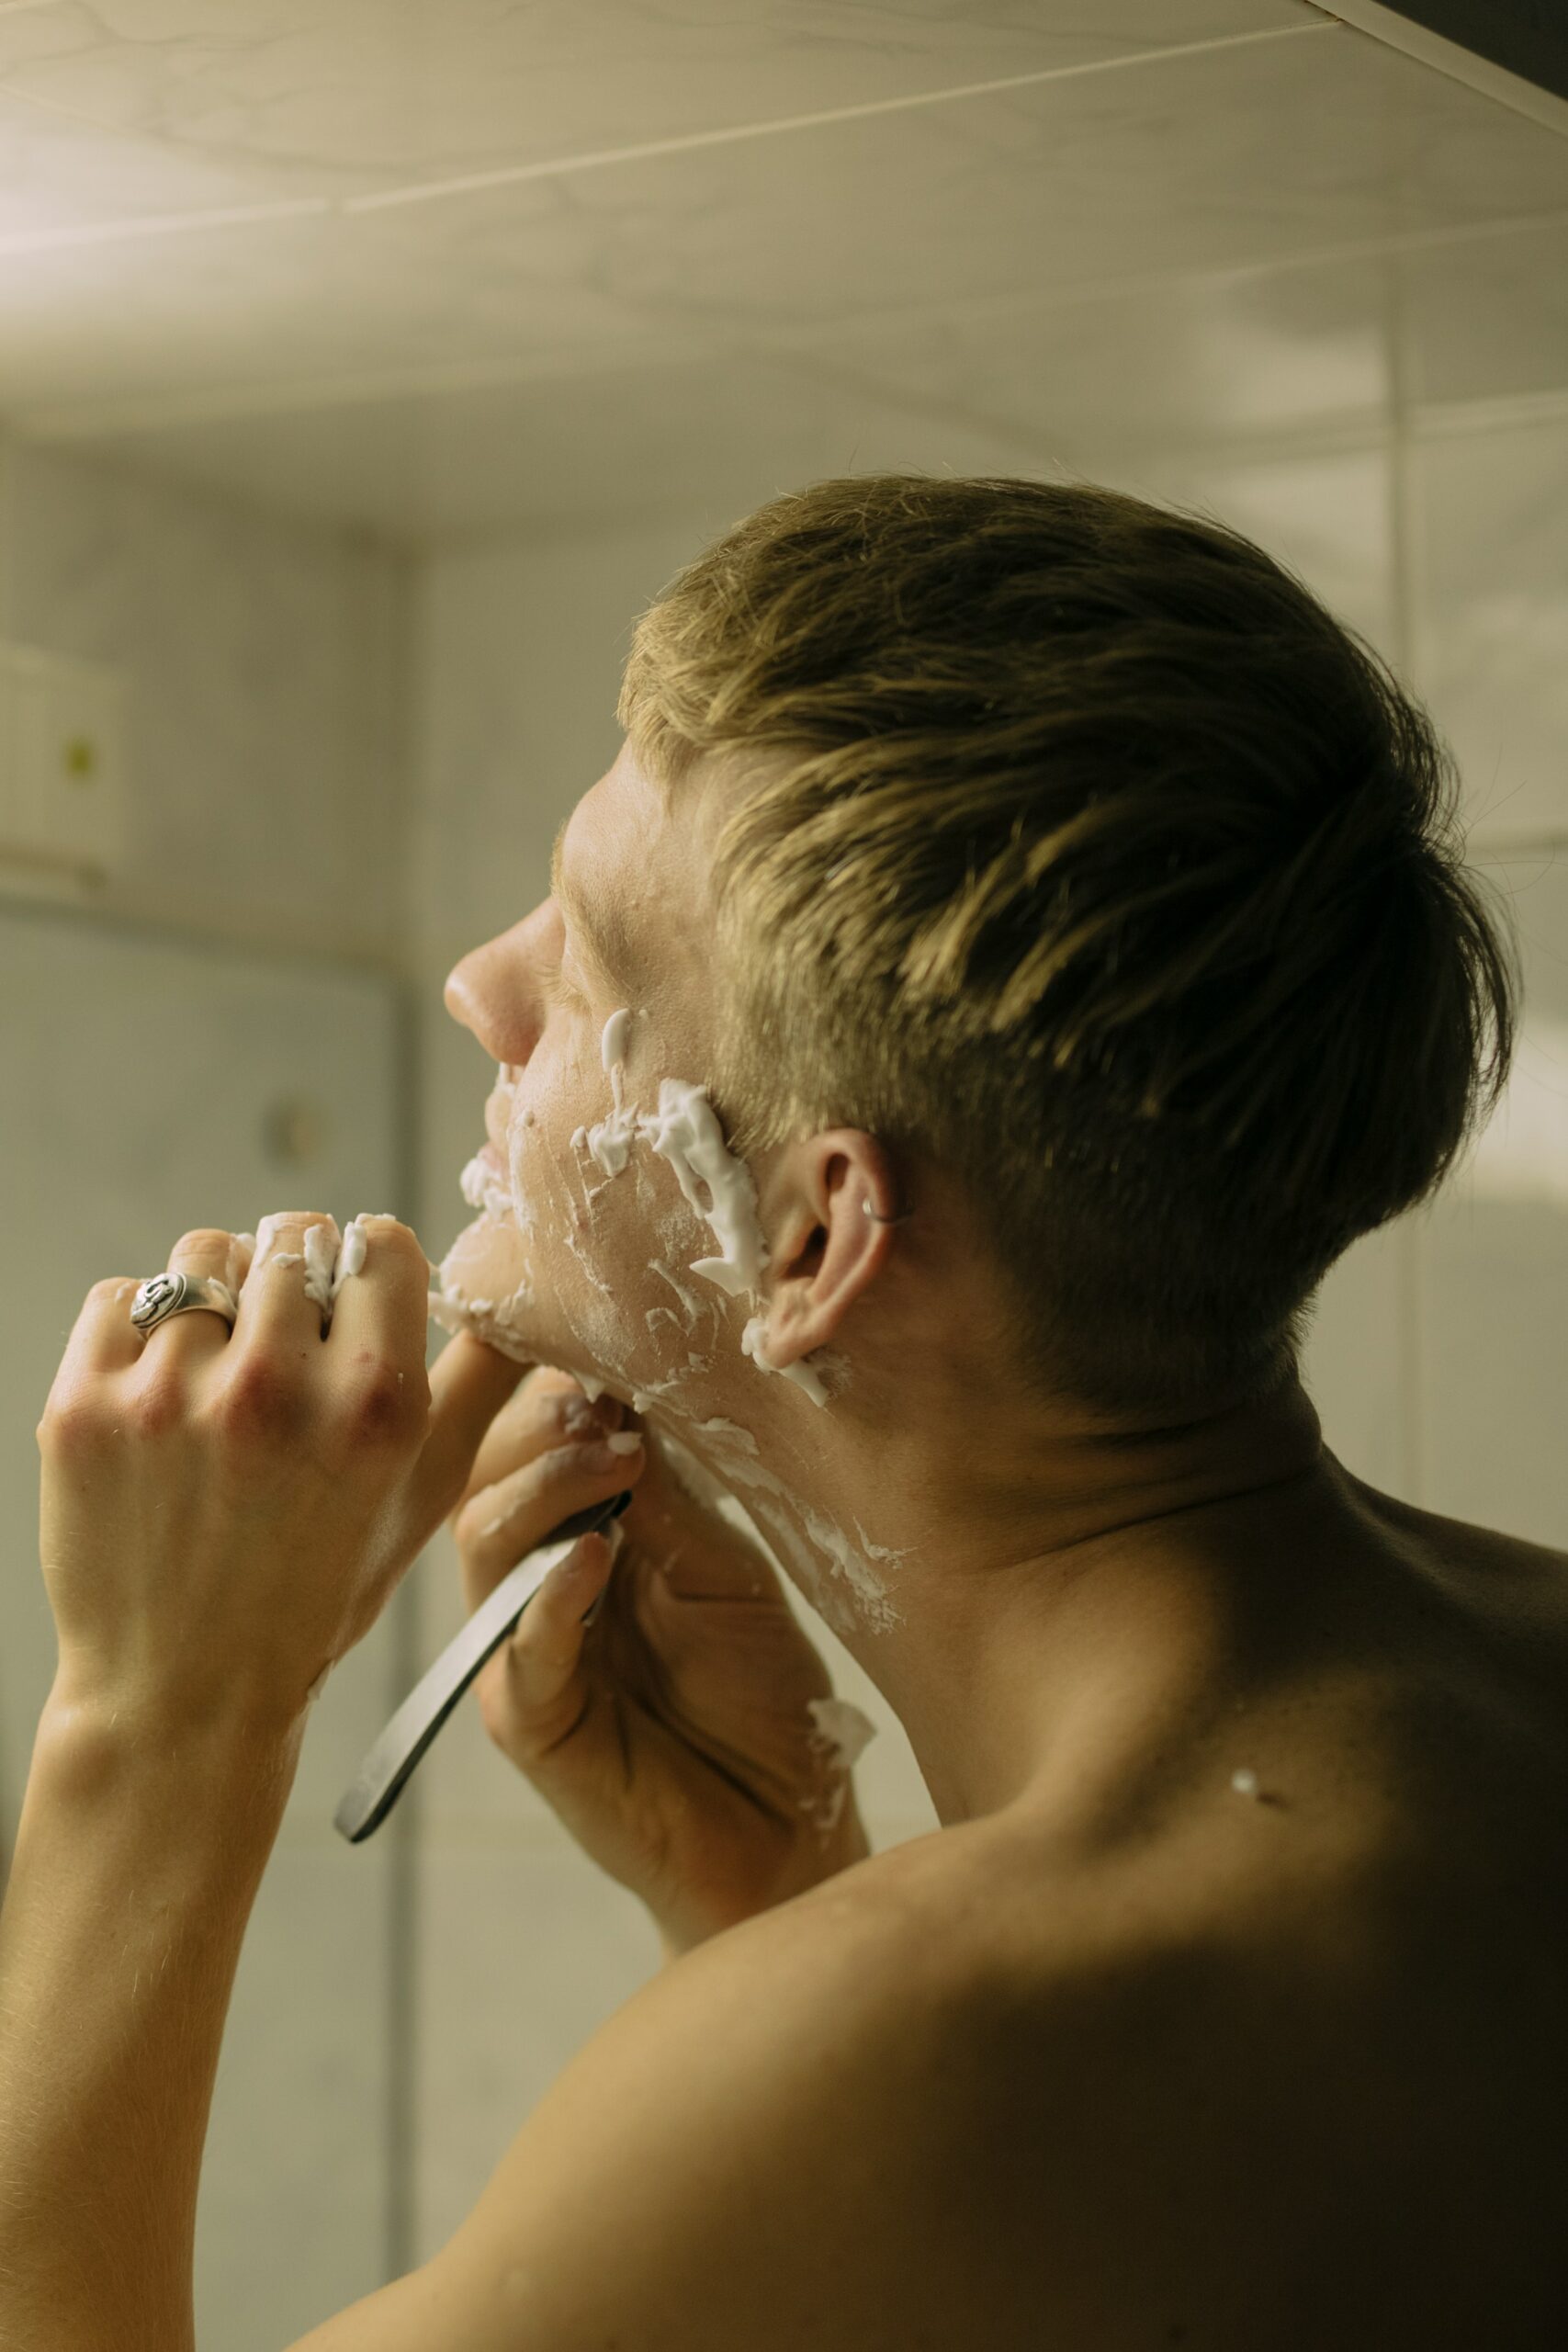 man shaving his face in mirror